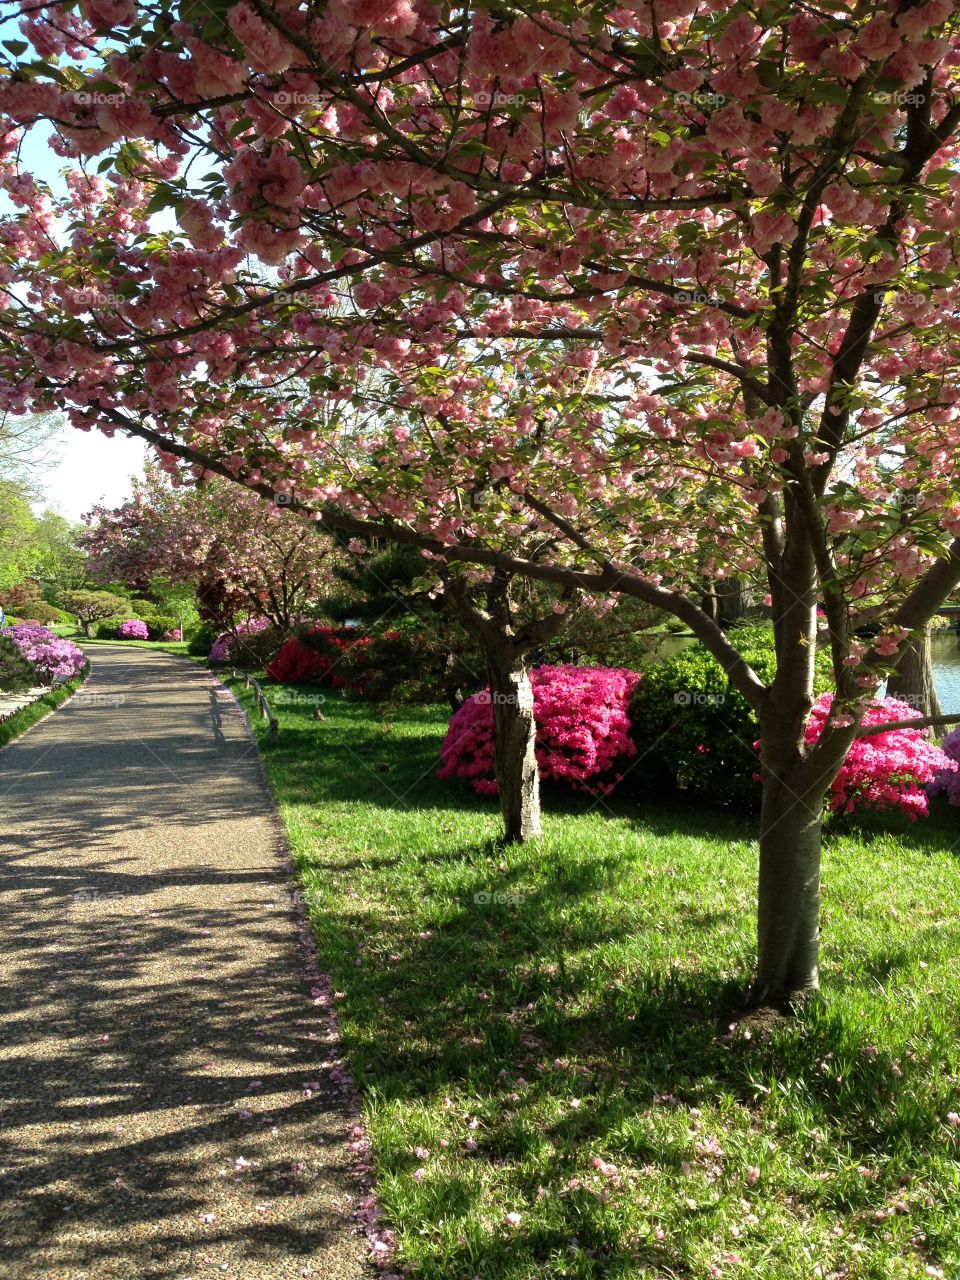 Weekday Stroll. Walking through the Japanese Garden at the Missouri Botanical Gardens. 